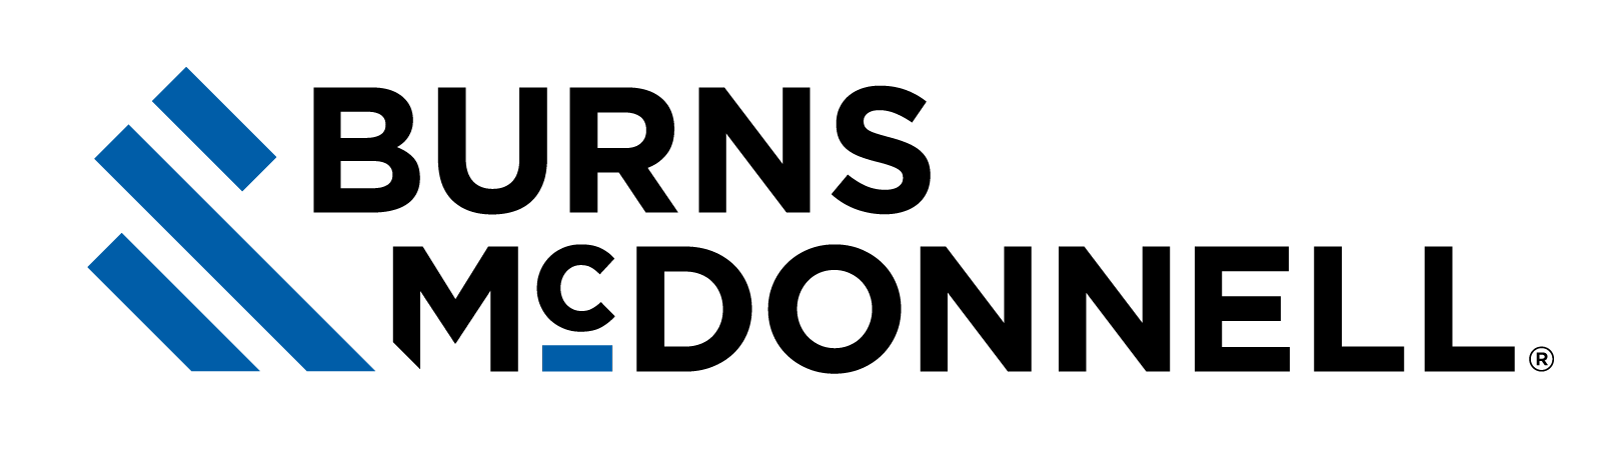 BMcD Logo.png